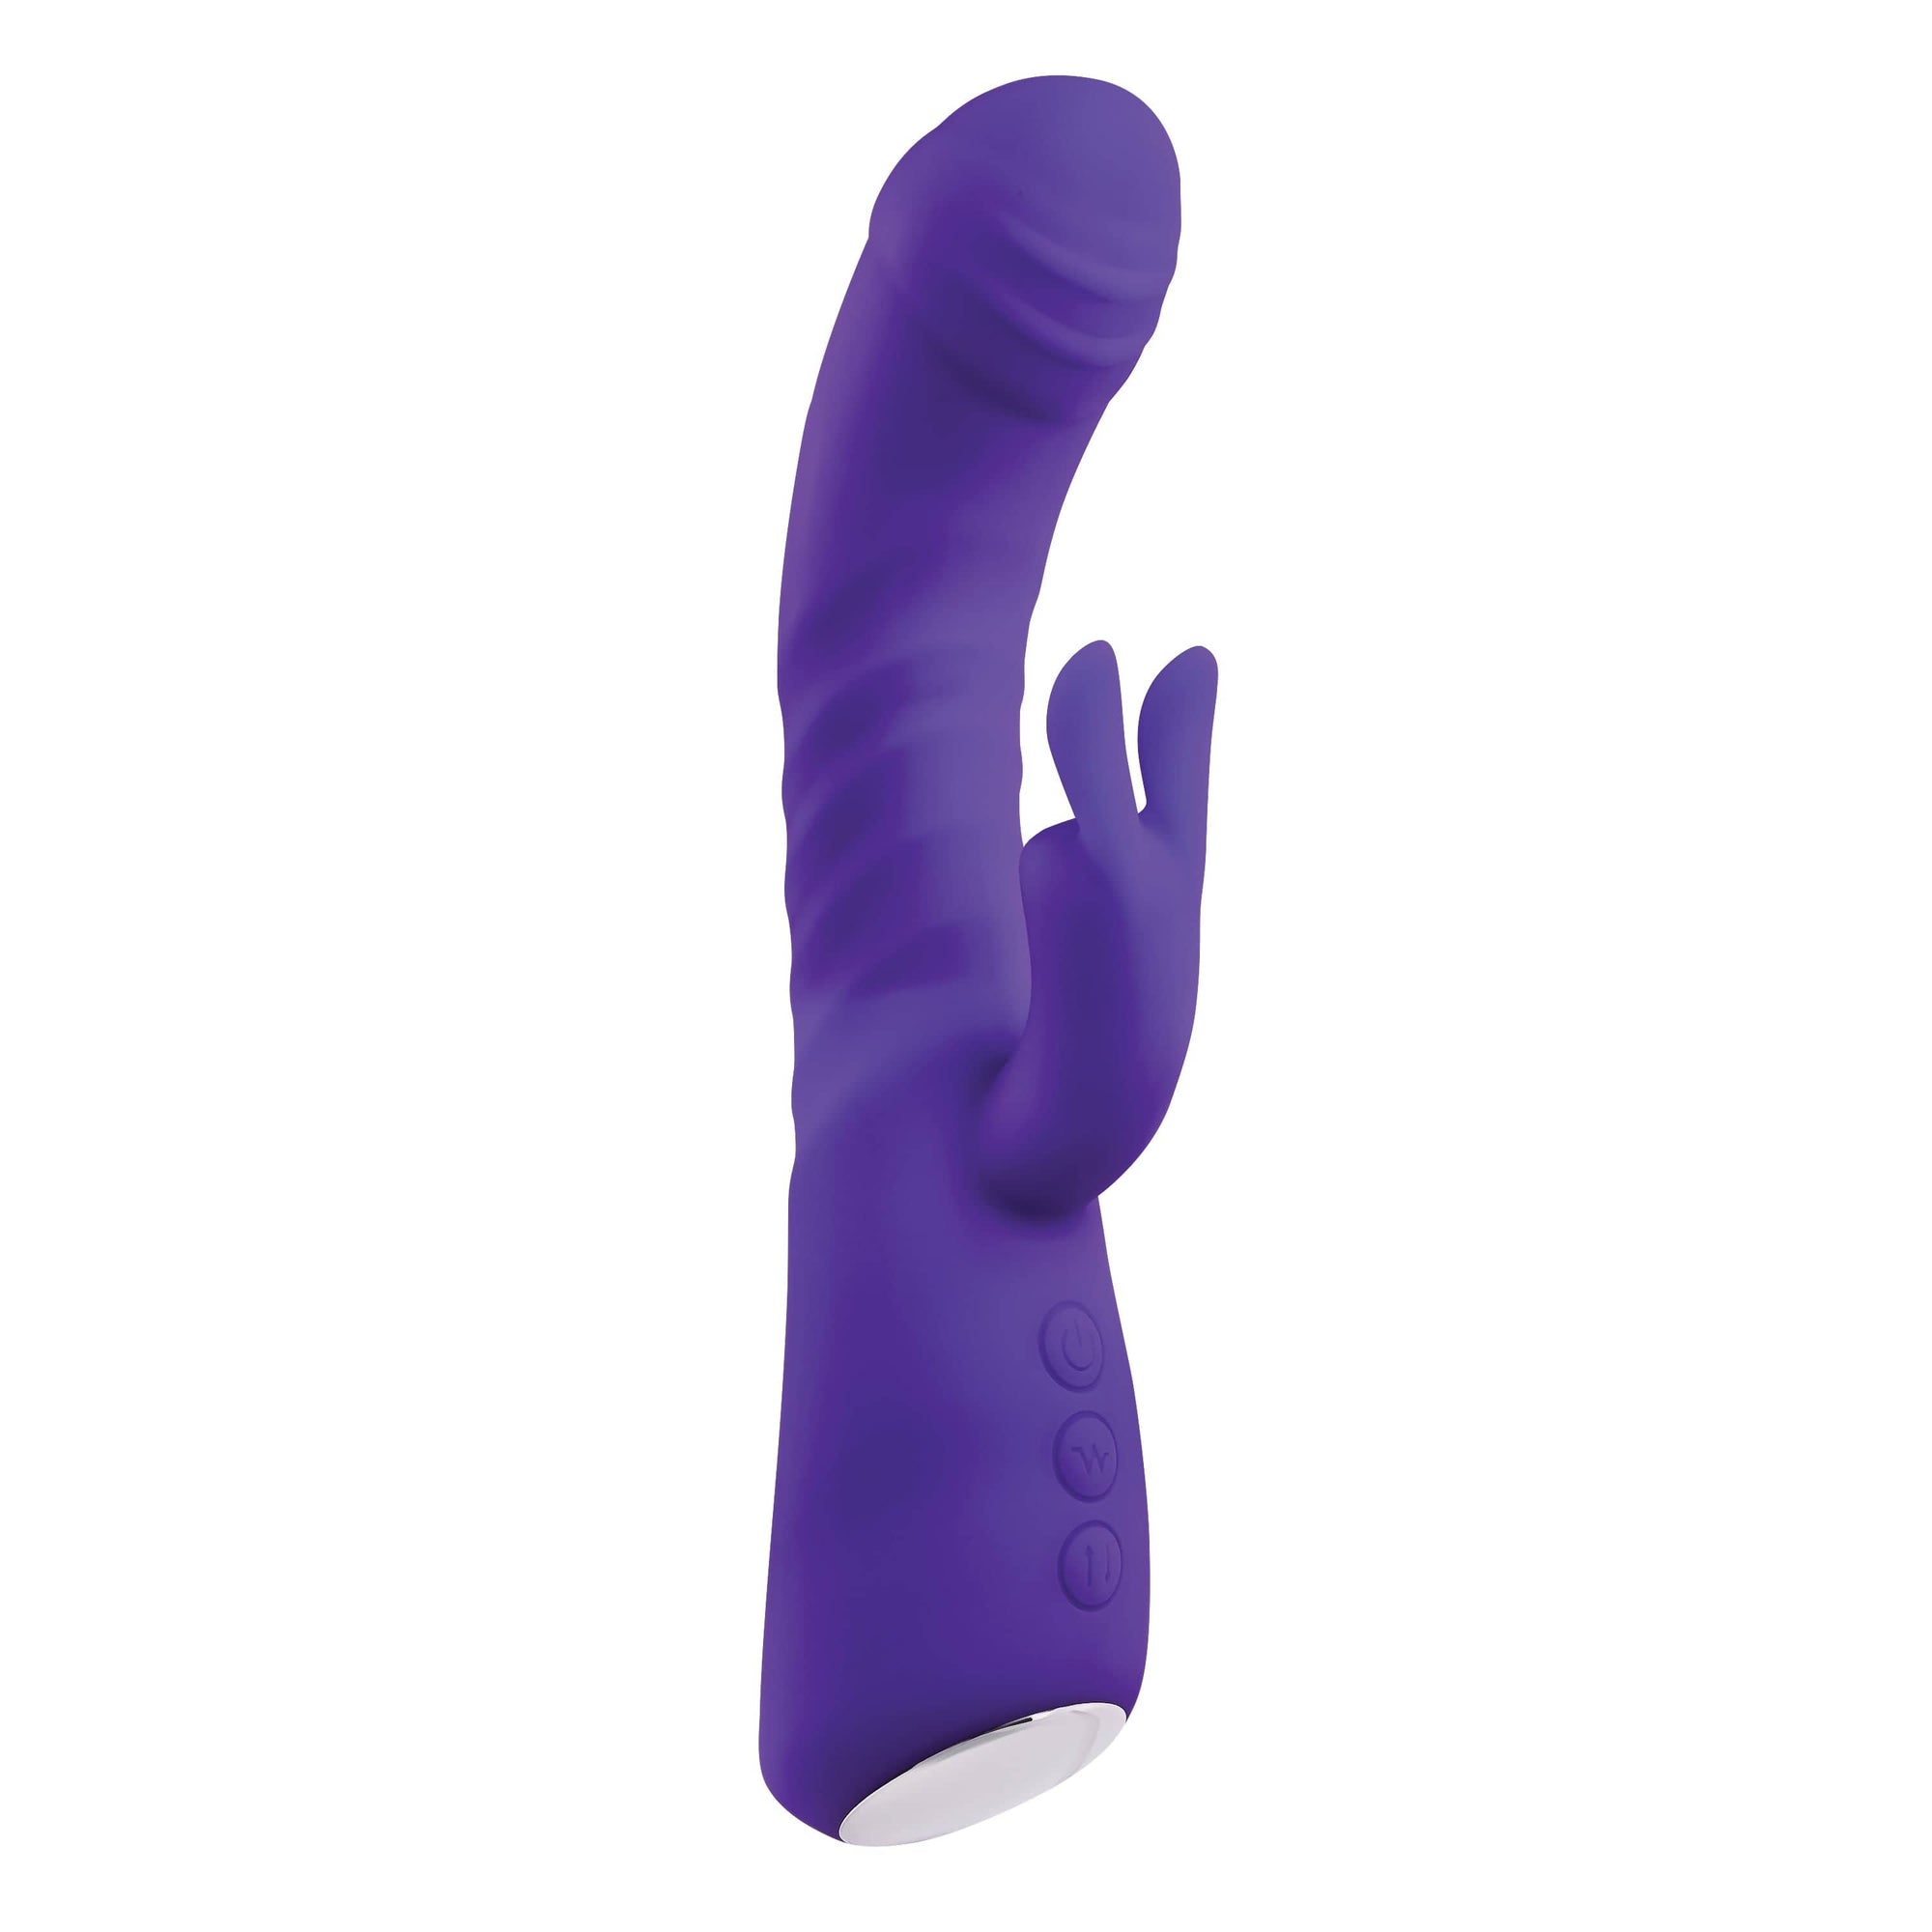 Adam & Eve - Eve's Posh Thrusting Warming Rabbit Vibrator (Purple) -  Rabbit Dildo (Vibration) Rechargeable  Durio.sg